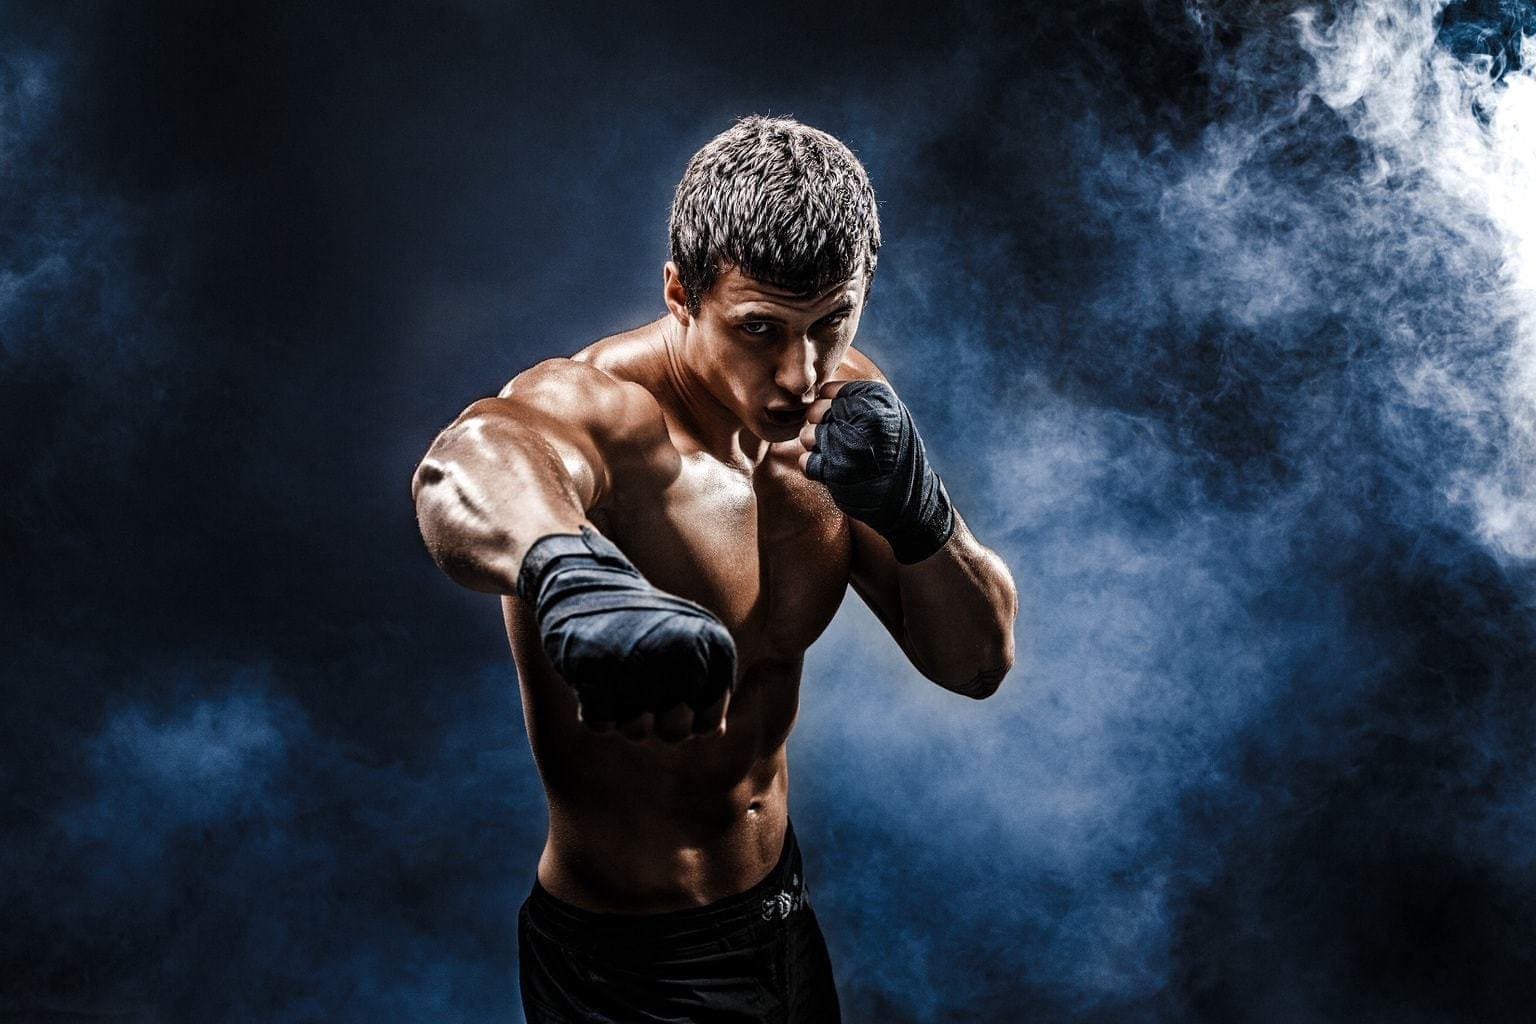 Strong muscular man boxing